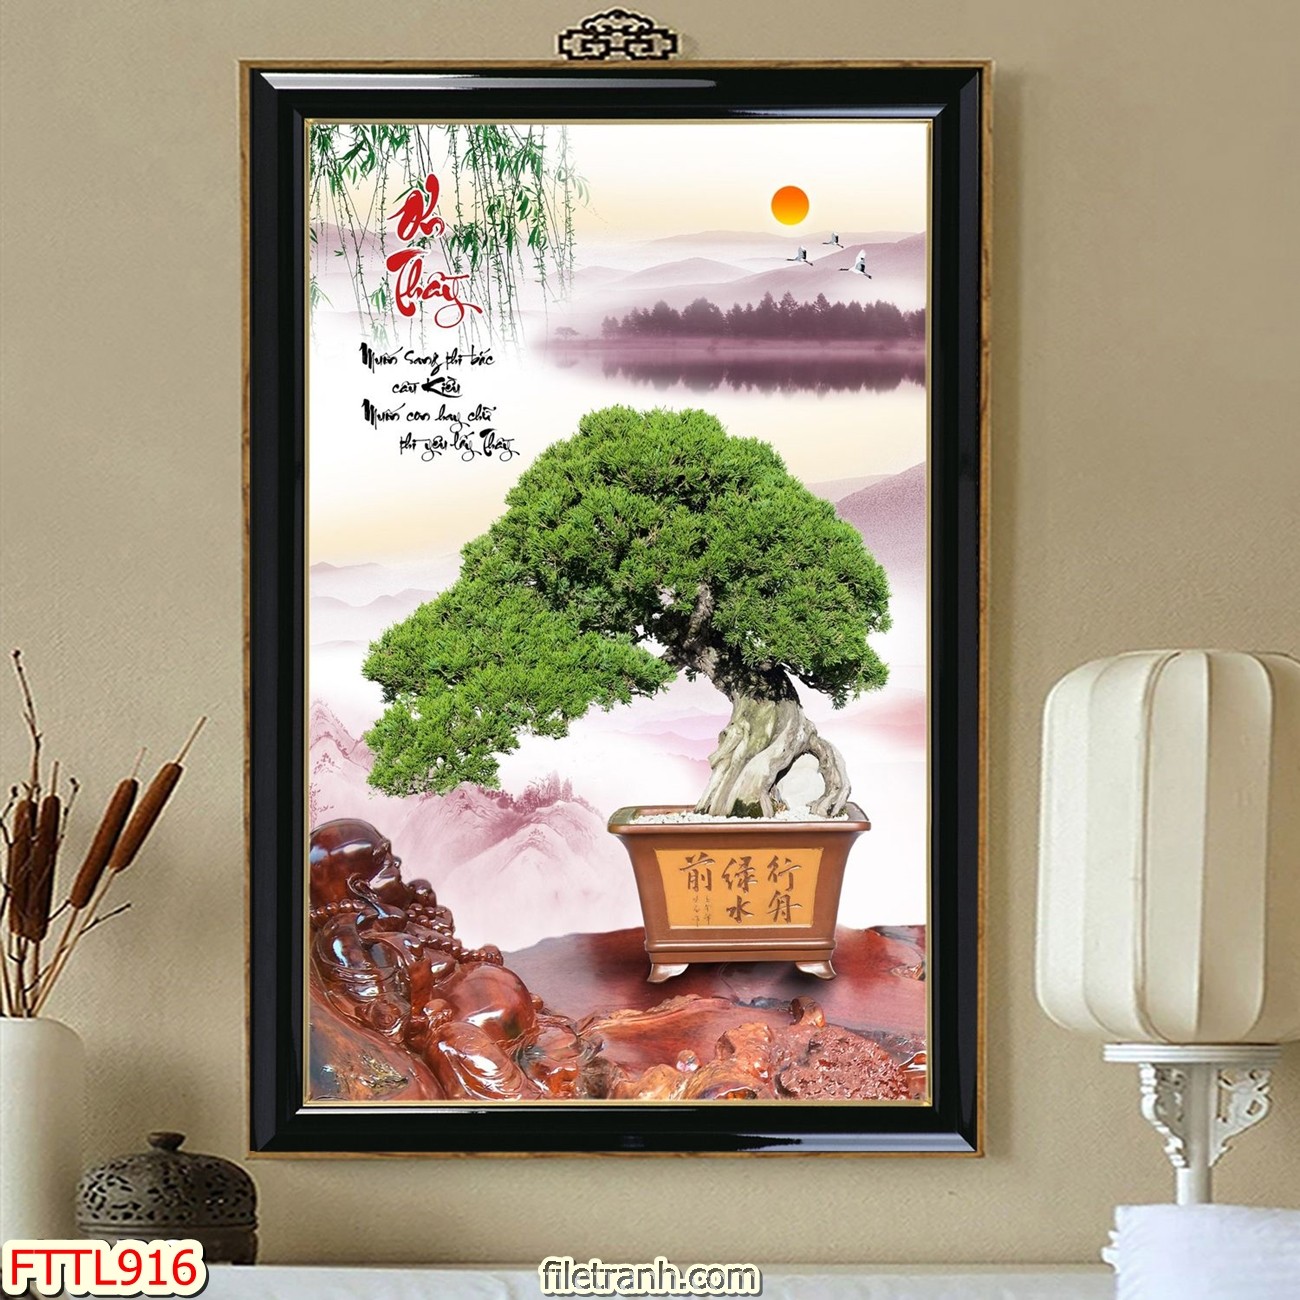 http://filetranh.com/file-tranh-chau-mai-bonsai/file-tranh-chau-mai-bonsai-fttl916.html